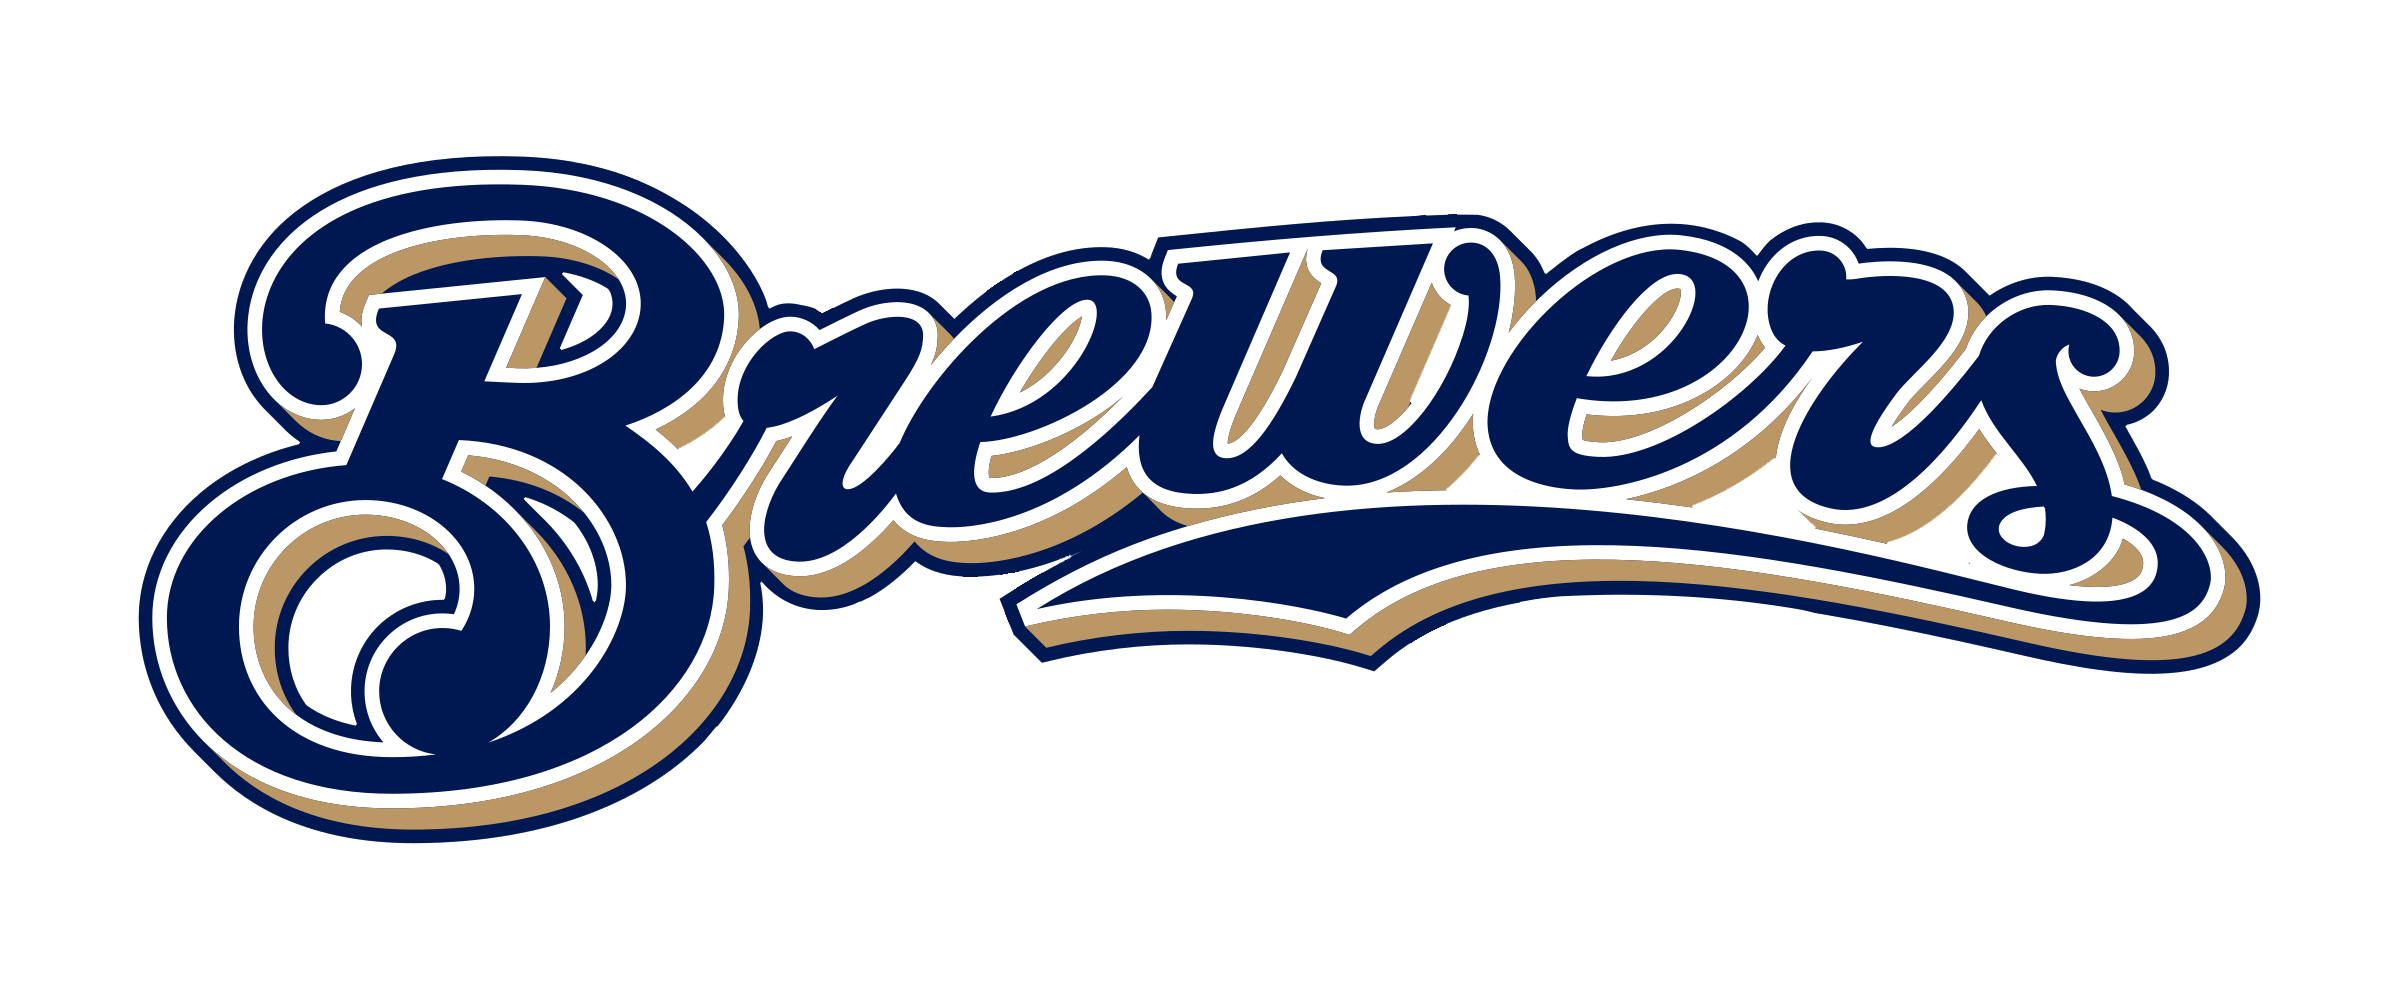 Brewers Logo - Milwaukee Brewers Logo PNG Transparent & SVG Vector - Freebie Supply